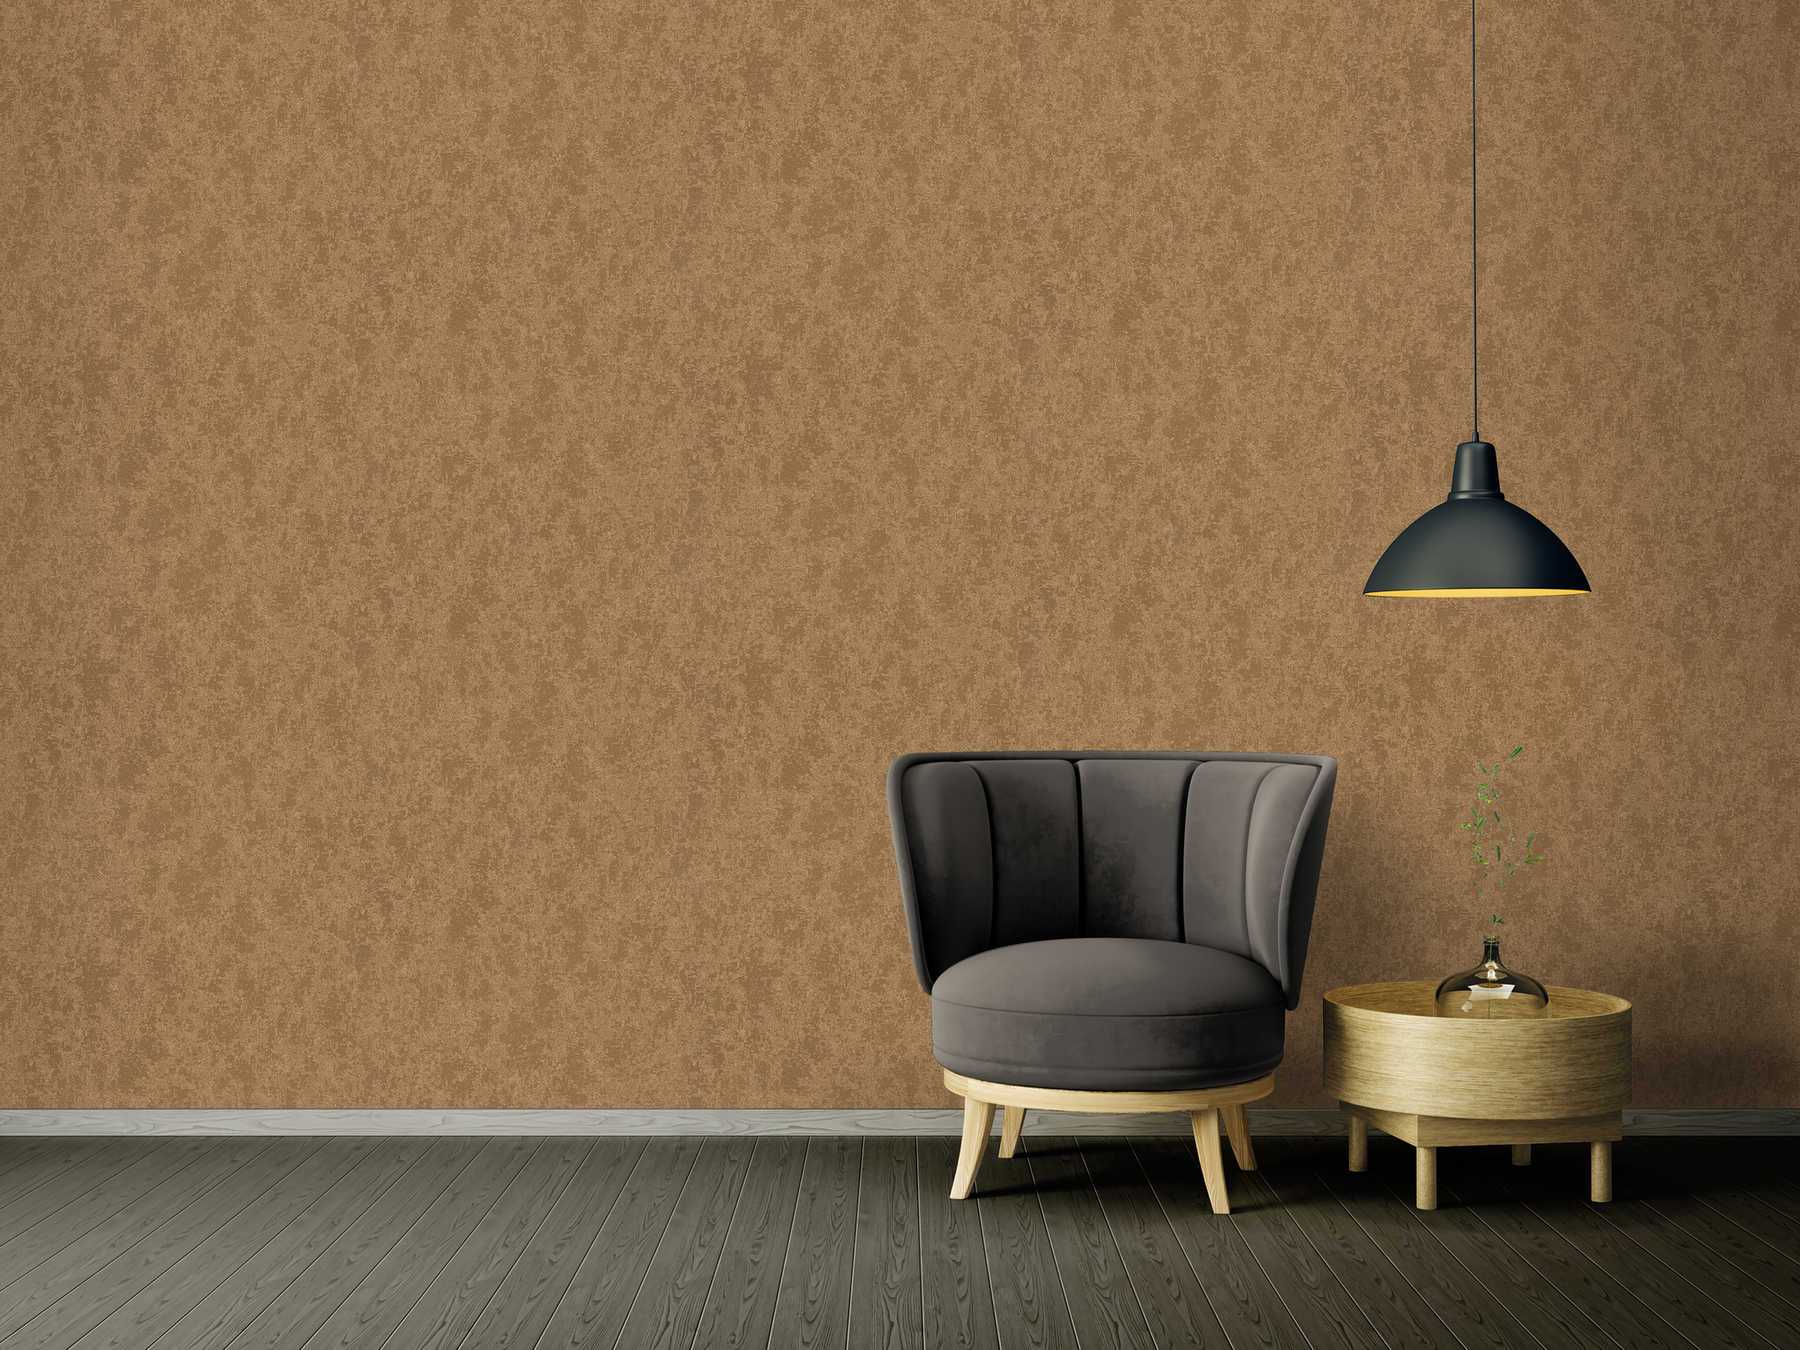             Wallpaper old gold plain, metallic luster & texture effect
        